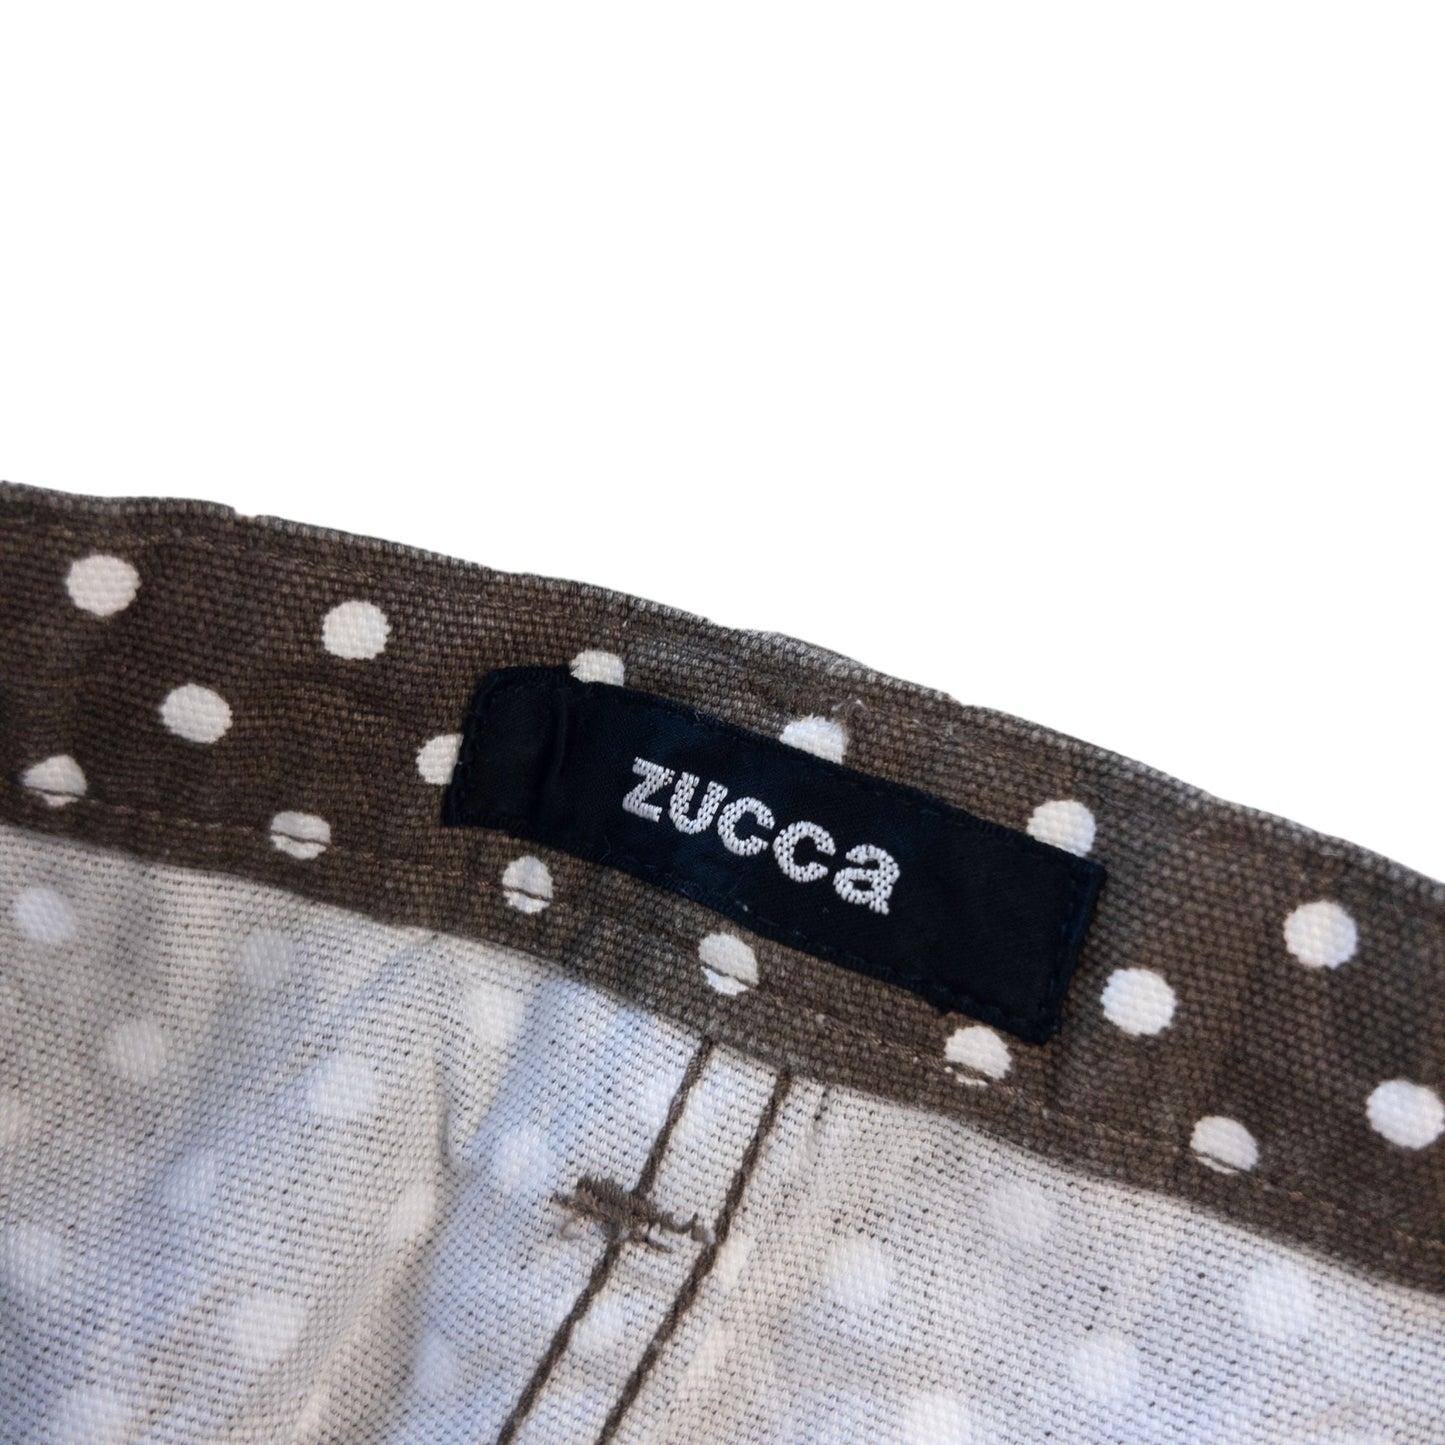 Vintage Zucca By Issey Miyake Polka Dot Skirt Women's Size W28